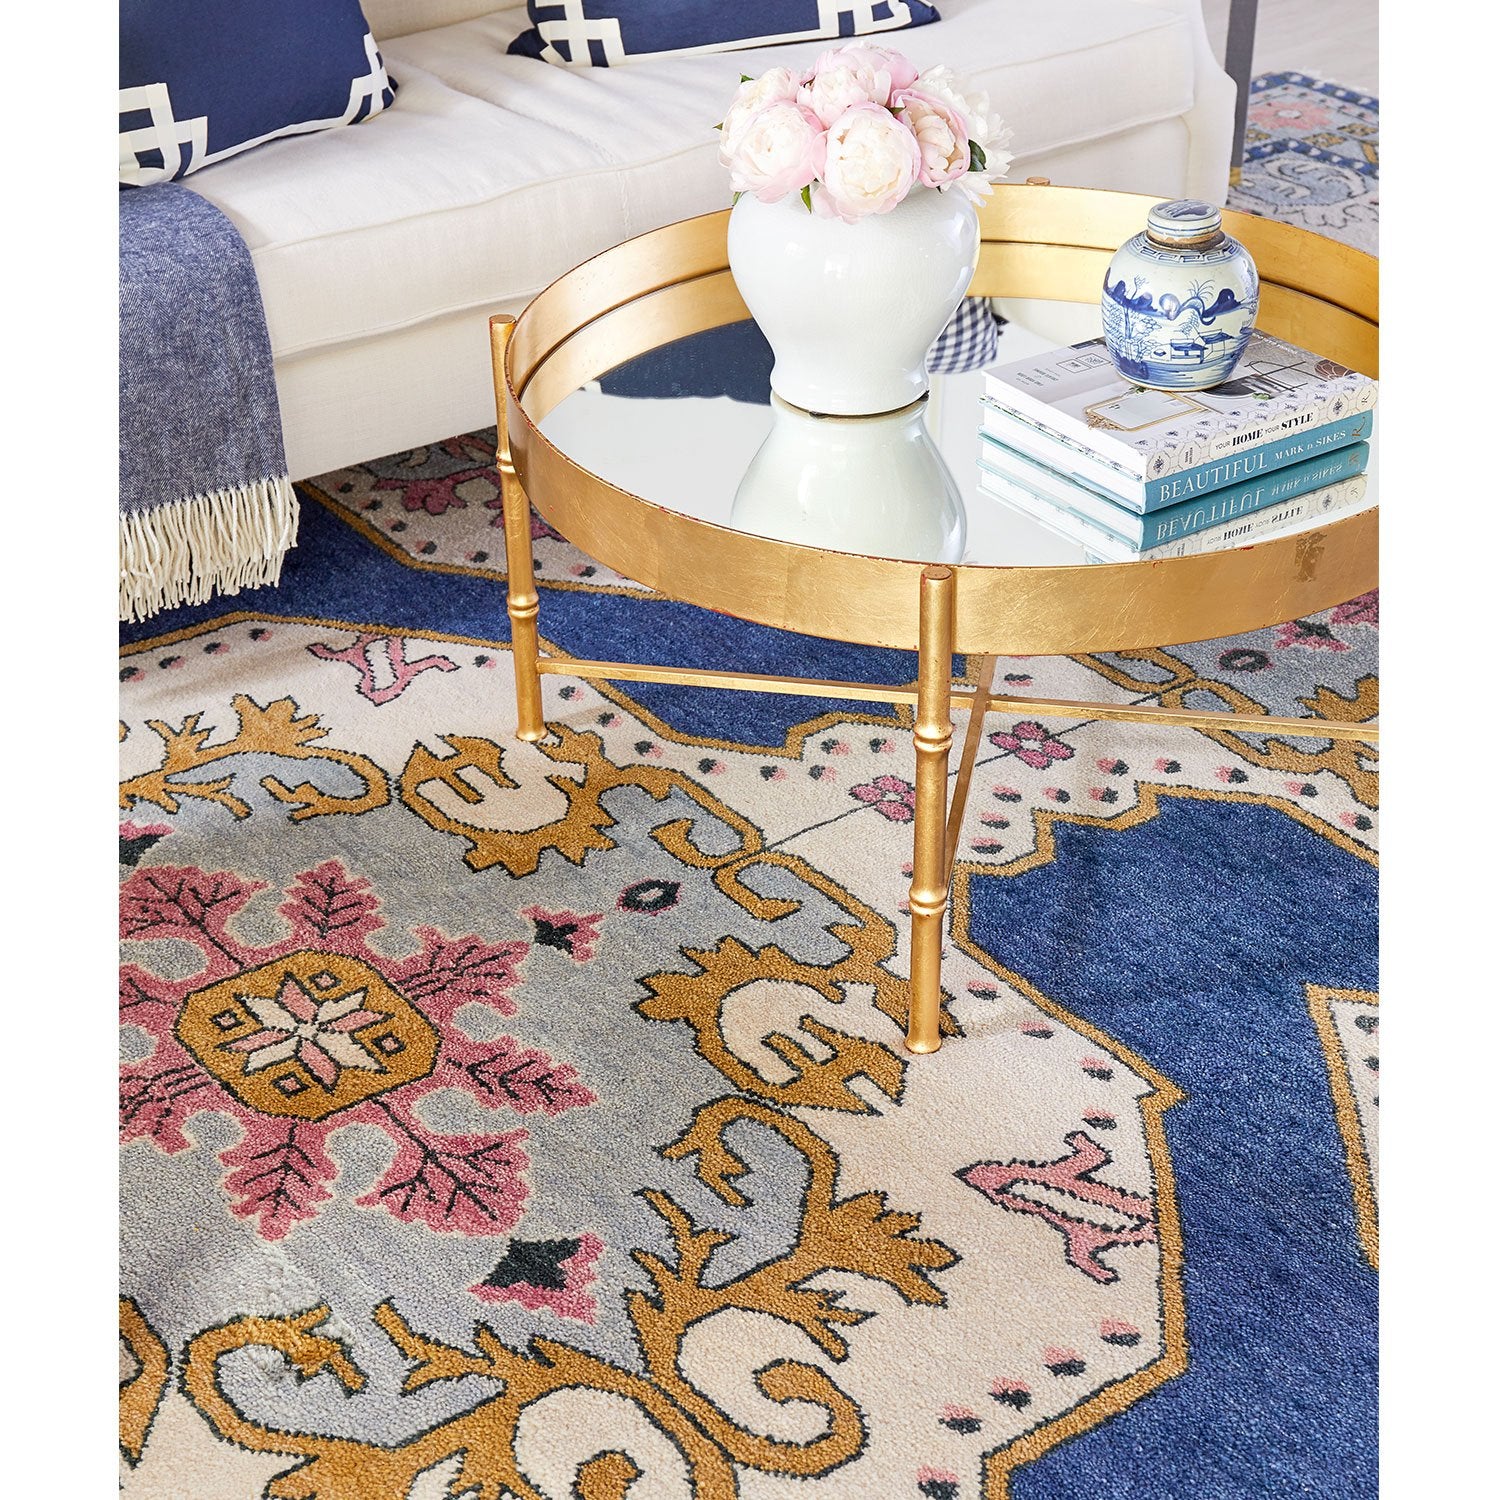 Navy Soleil Persian-style Rug in Living Room